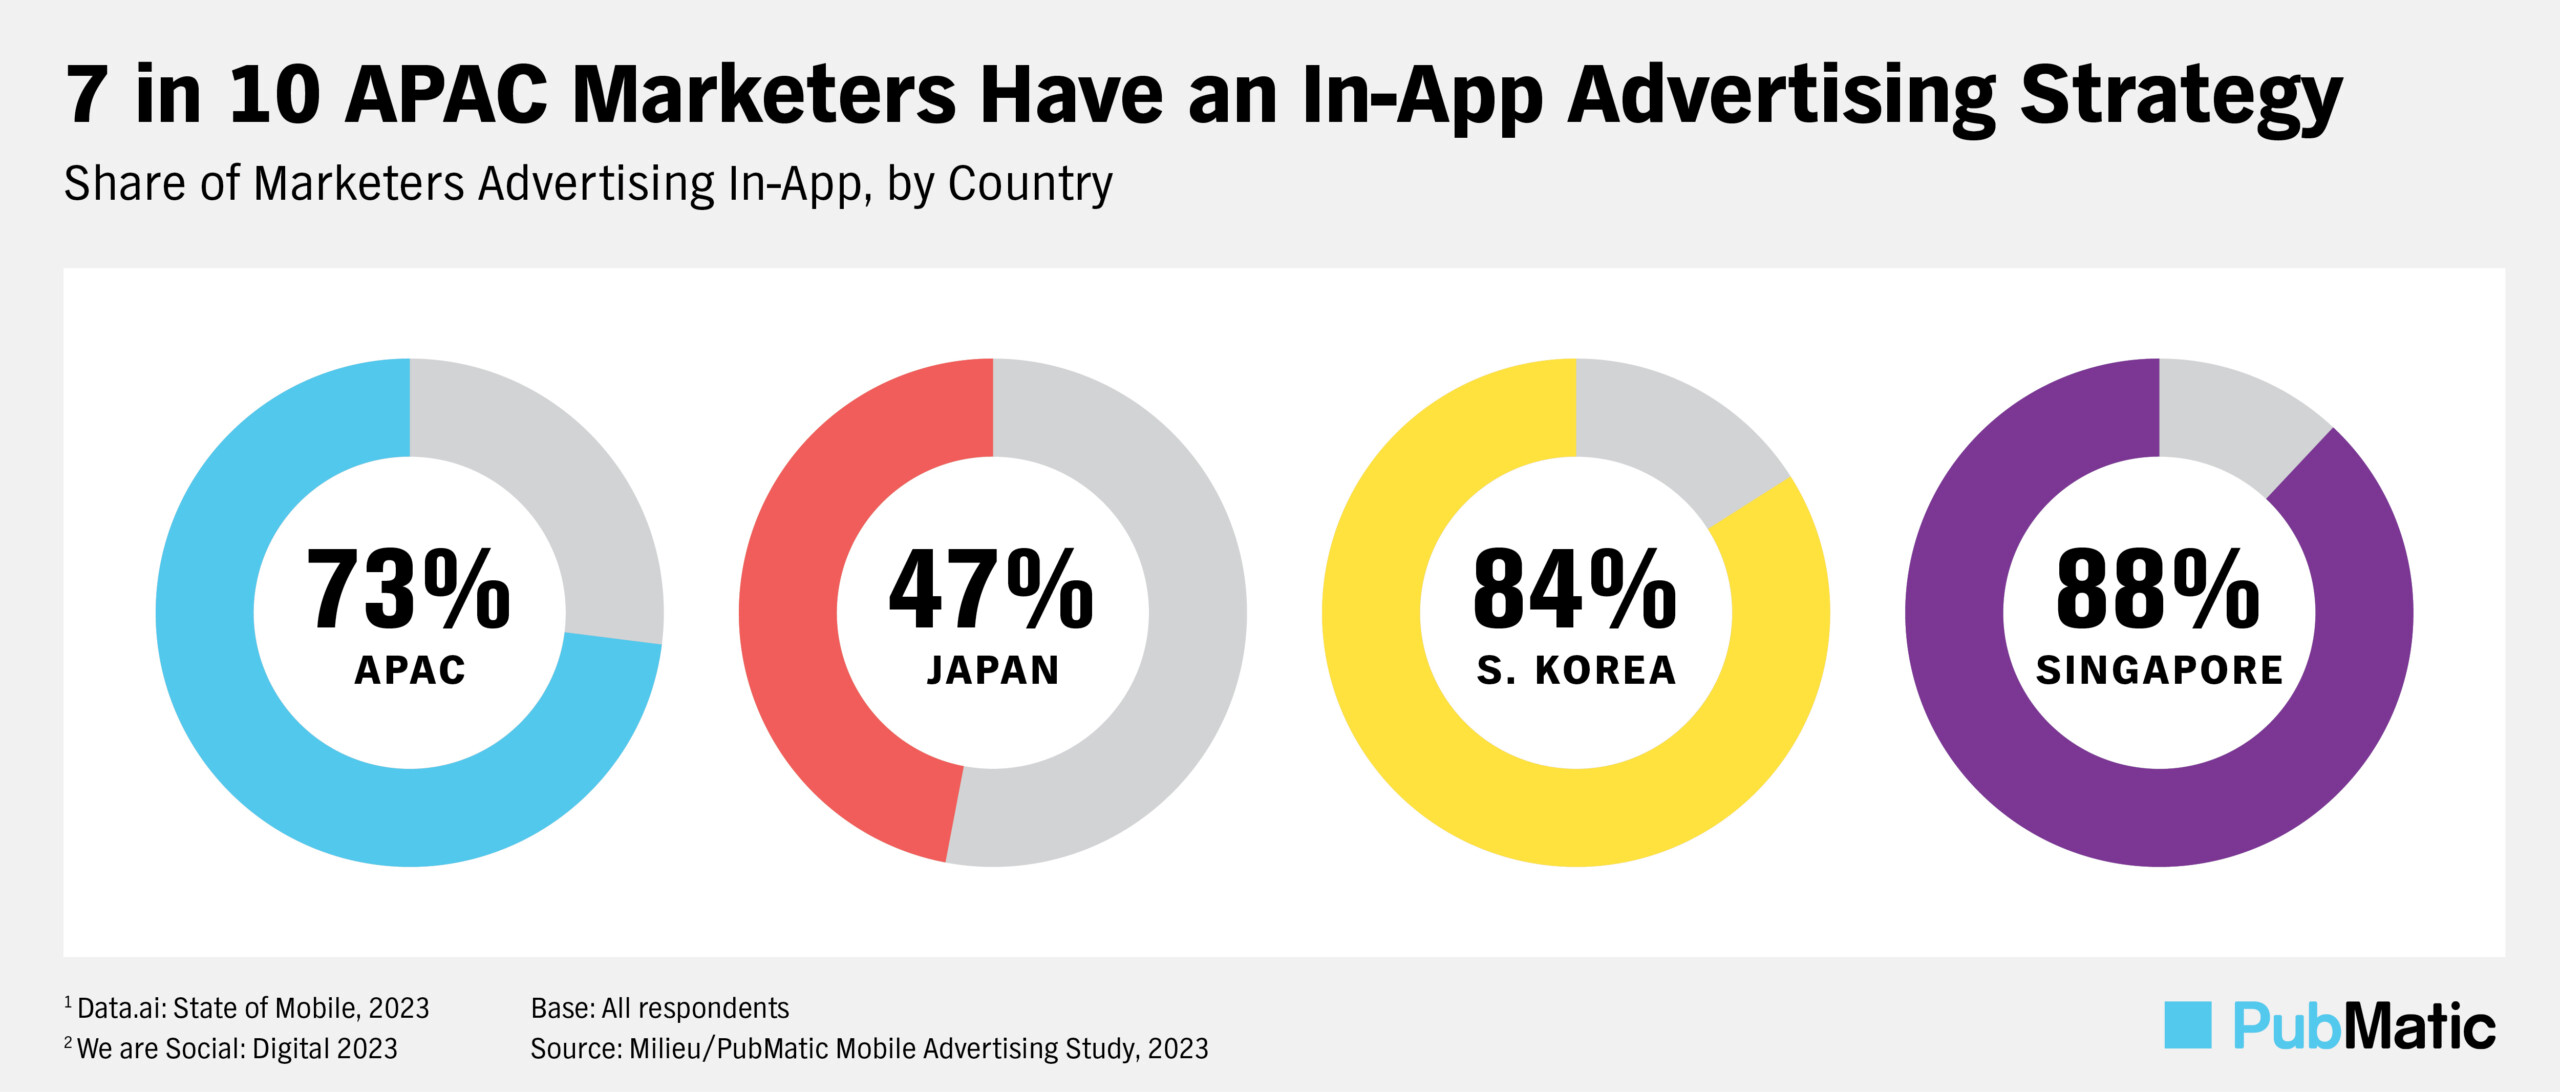 Chart showing APAC in-app marketing adoption